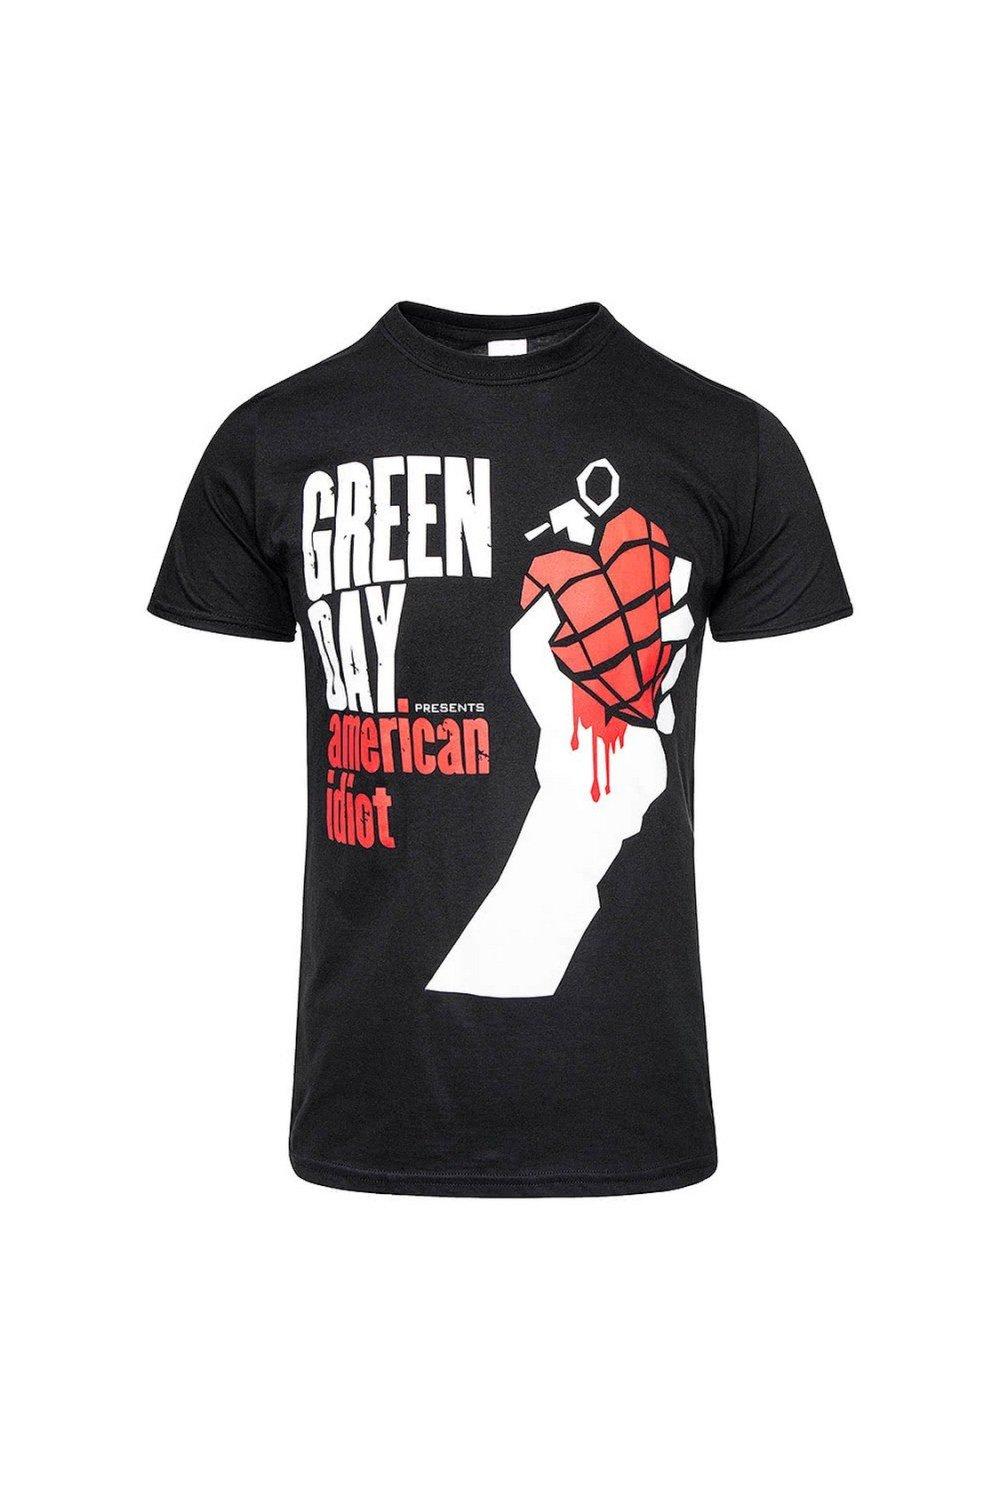 Футболка «Американский идиот» Green Day, черный футболка американский идиот green day серый